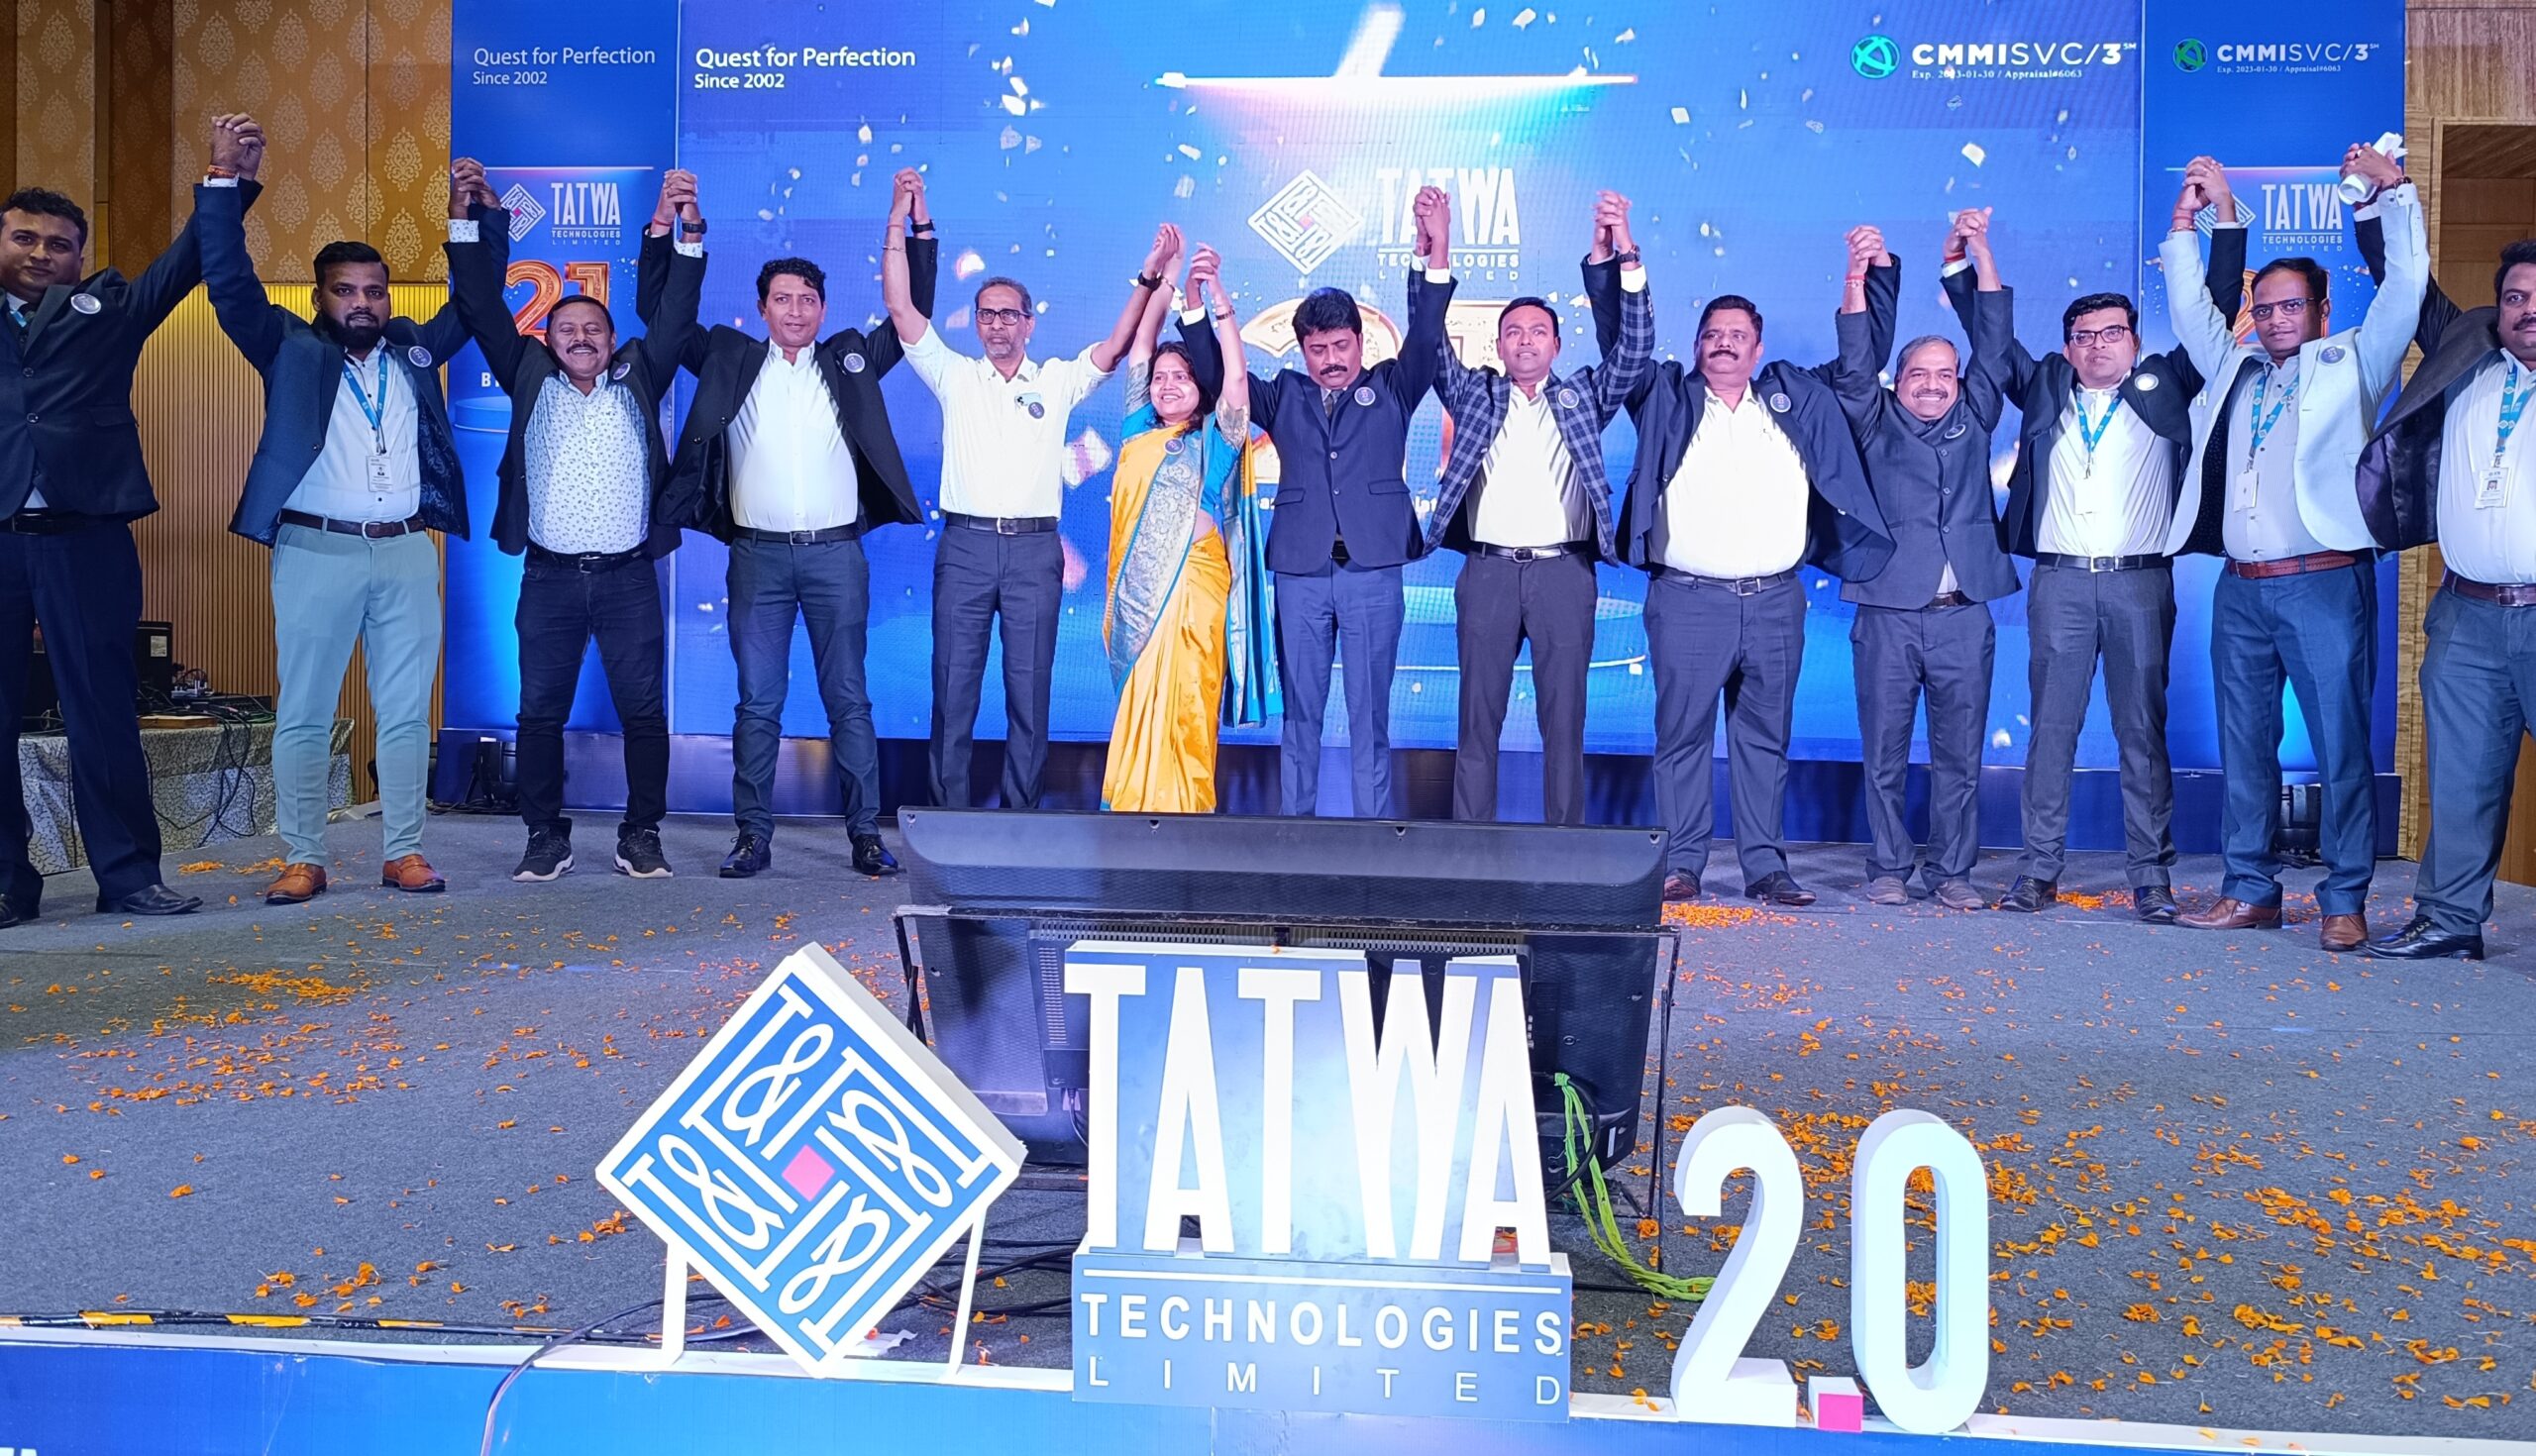 Tatwa Technologies completes 21 years